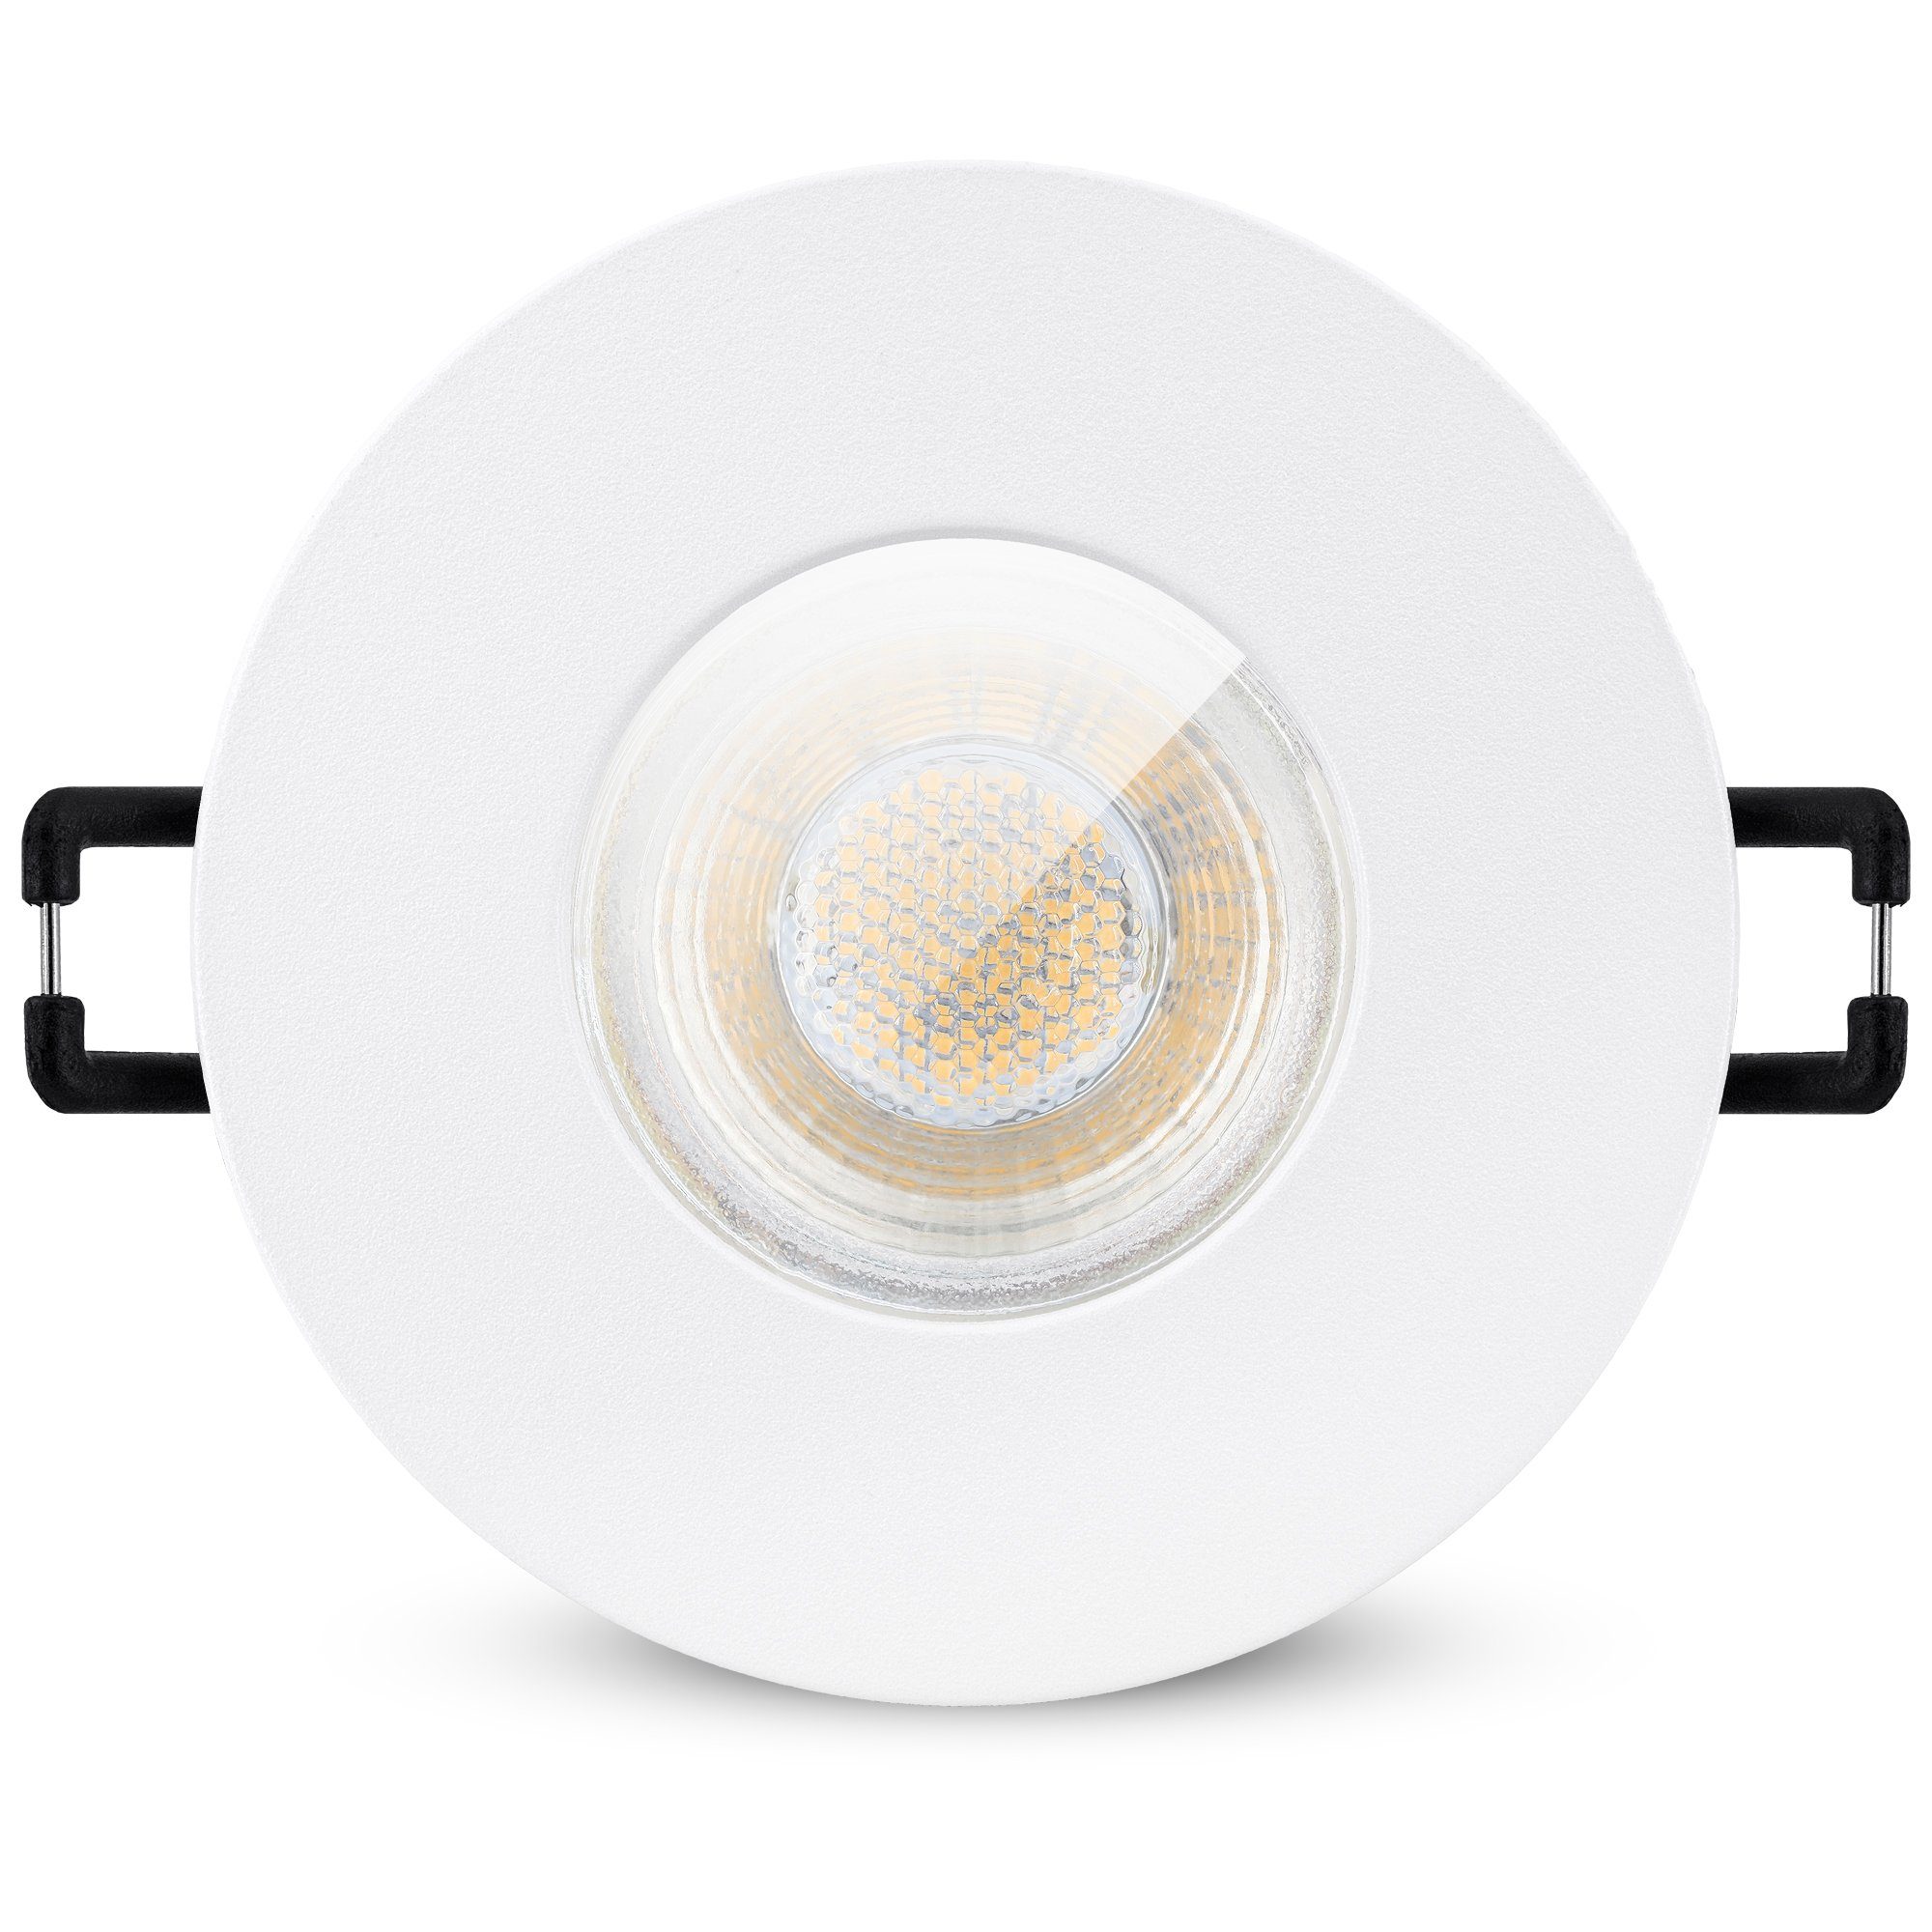 3W Leuchtmittel Einbauspot Einbaustrahler neutralweiss inklusive, GU10 LED inklusive matt, Leuchtmittel - linovum IP65 LED Einbaustrahler 230V